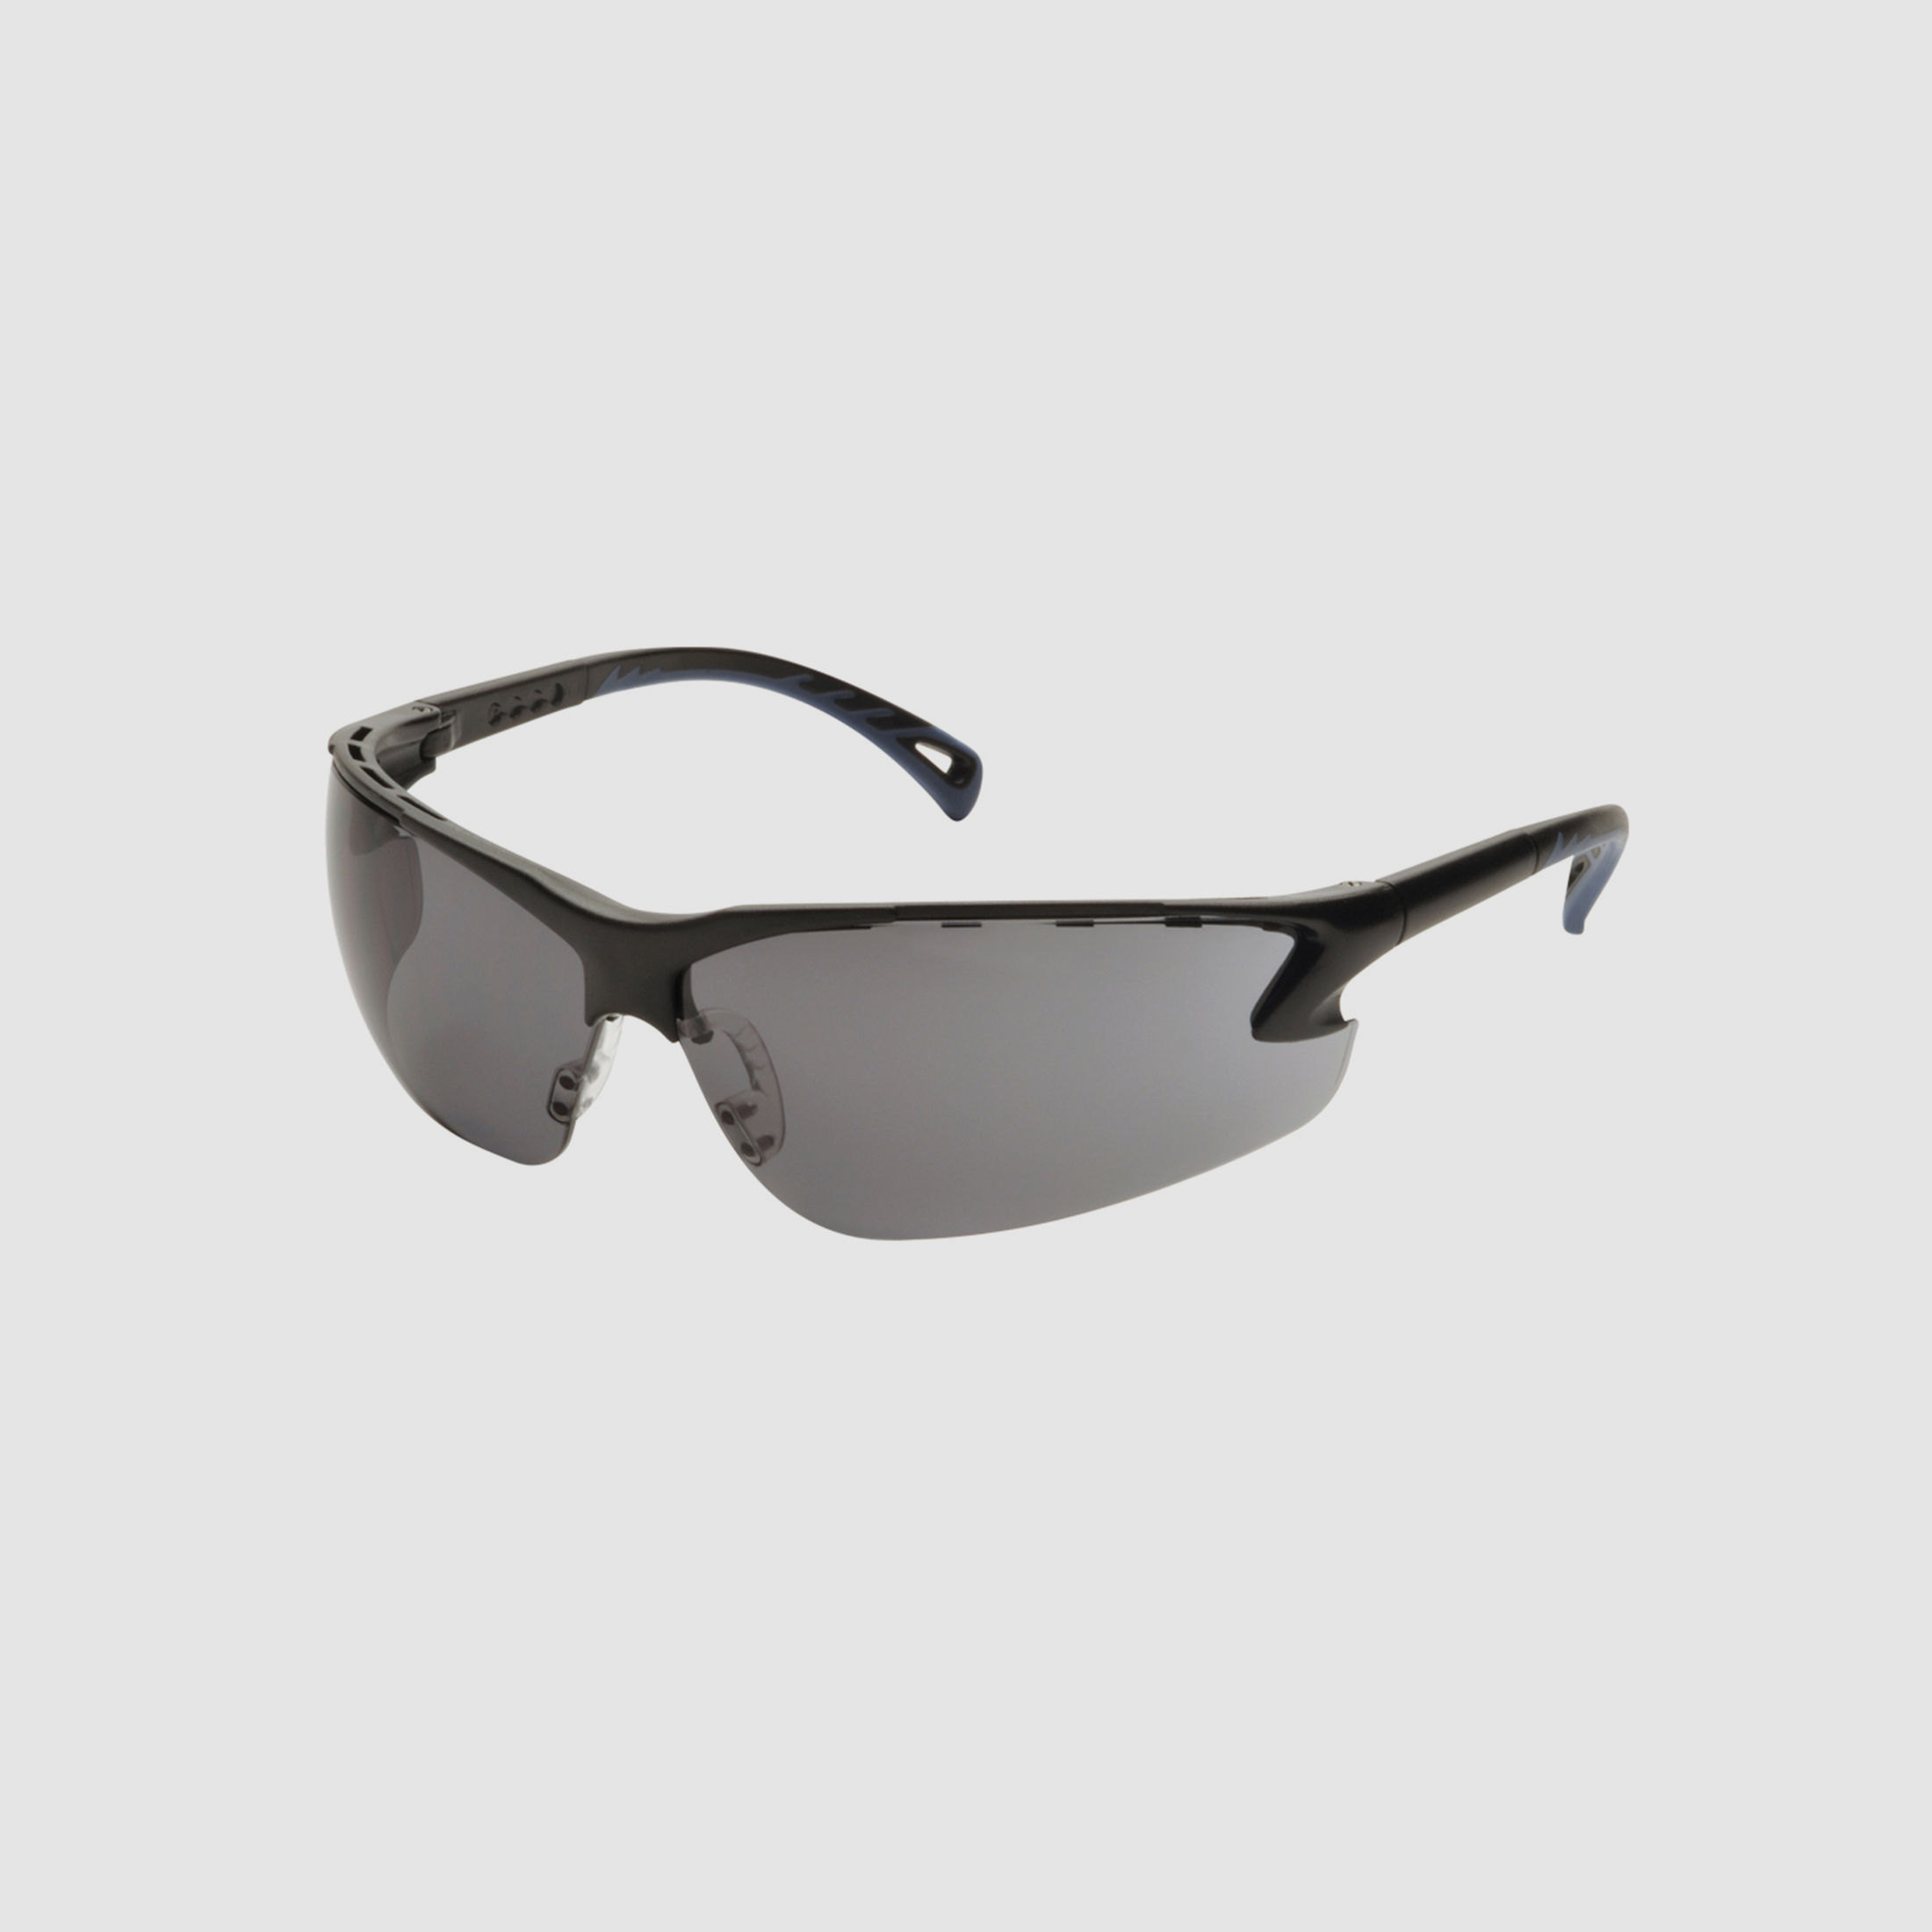 ASG Schießbrille grau